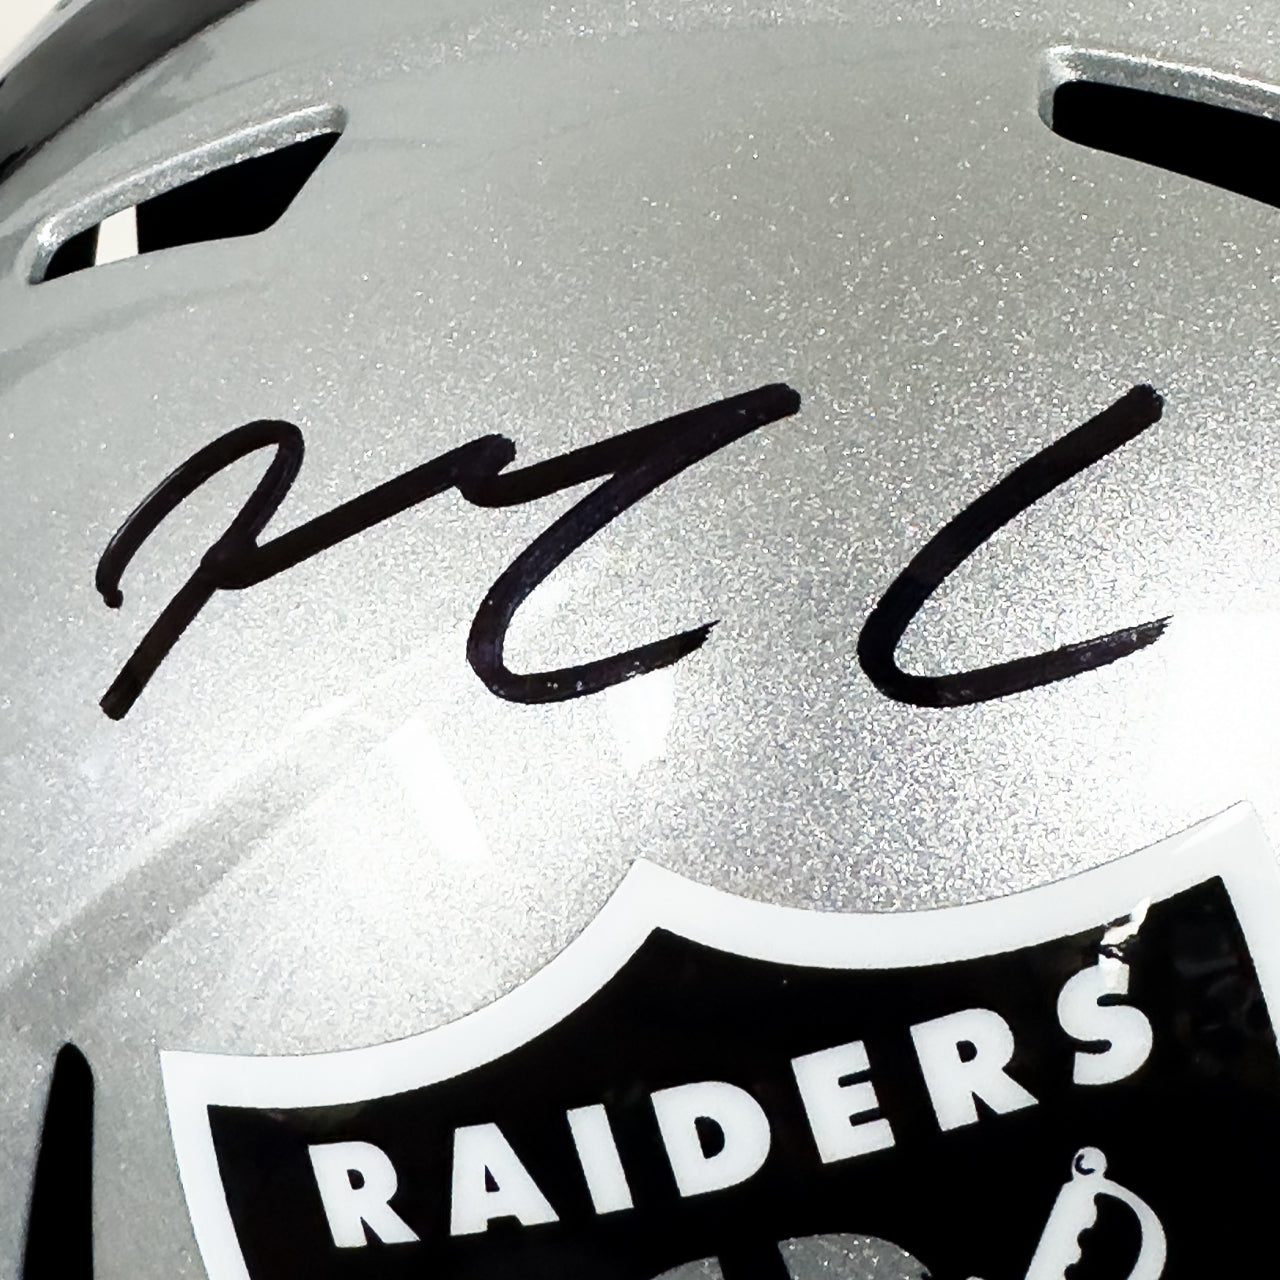 Maxx Crosby Signed Raiders Speed Full Size Replica Helmet